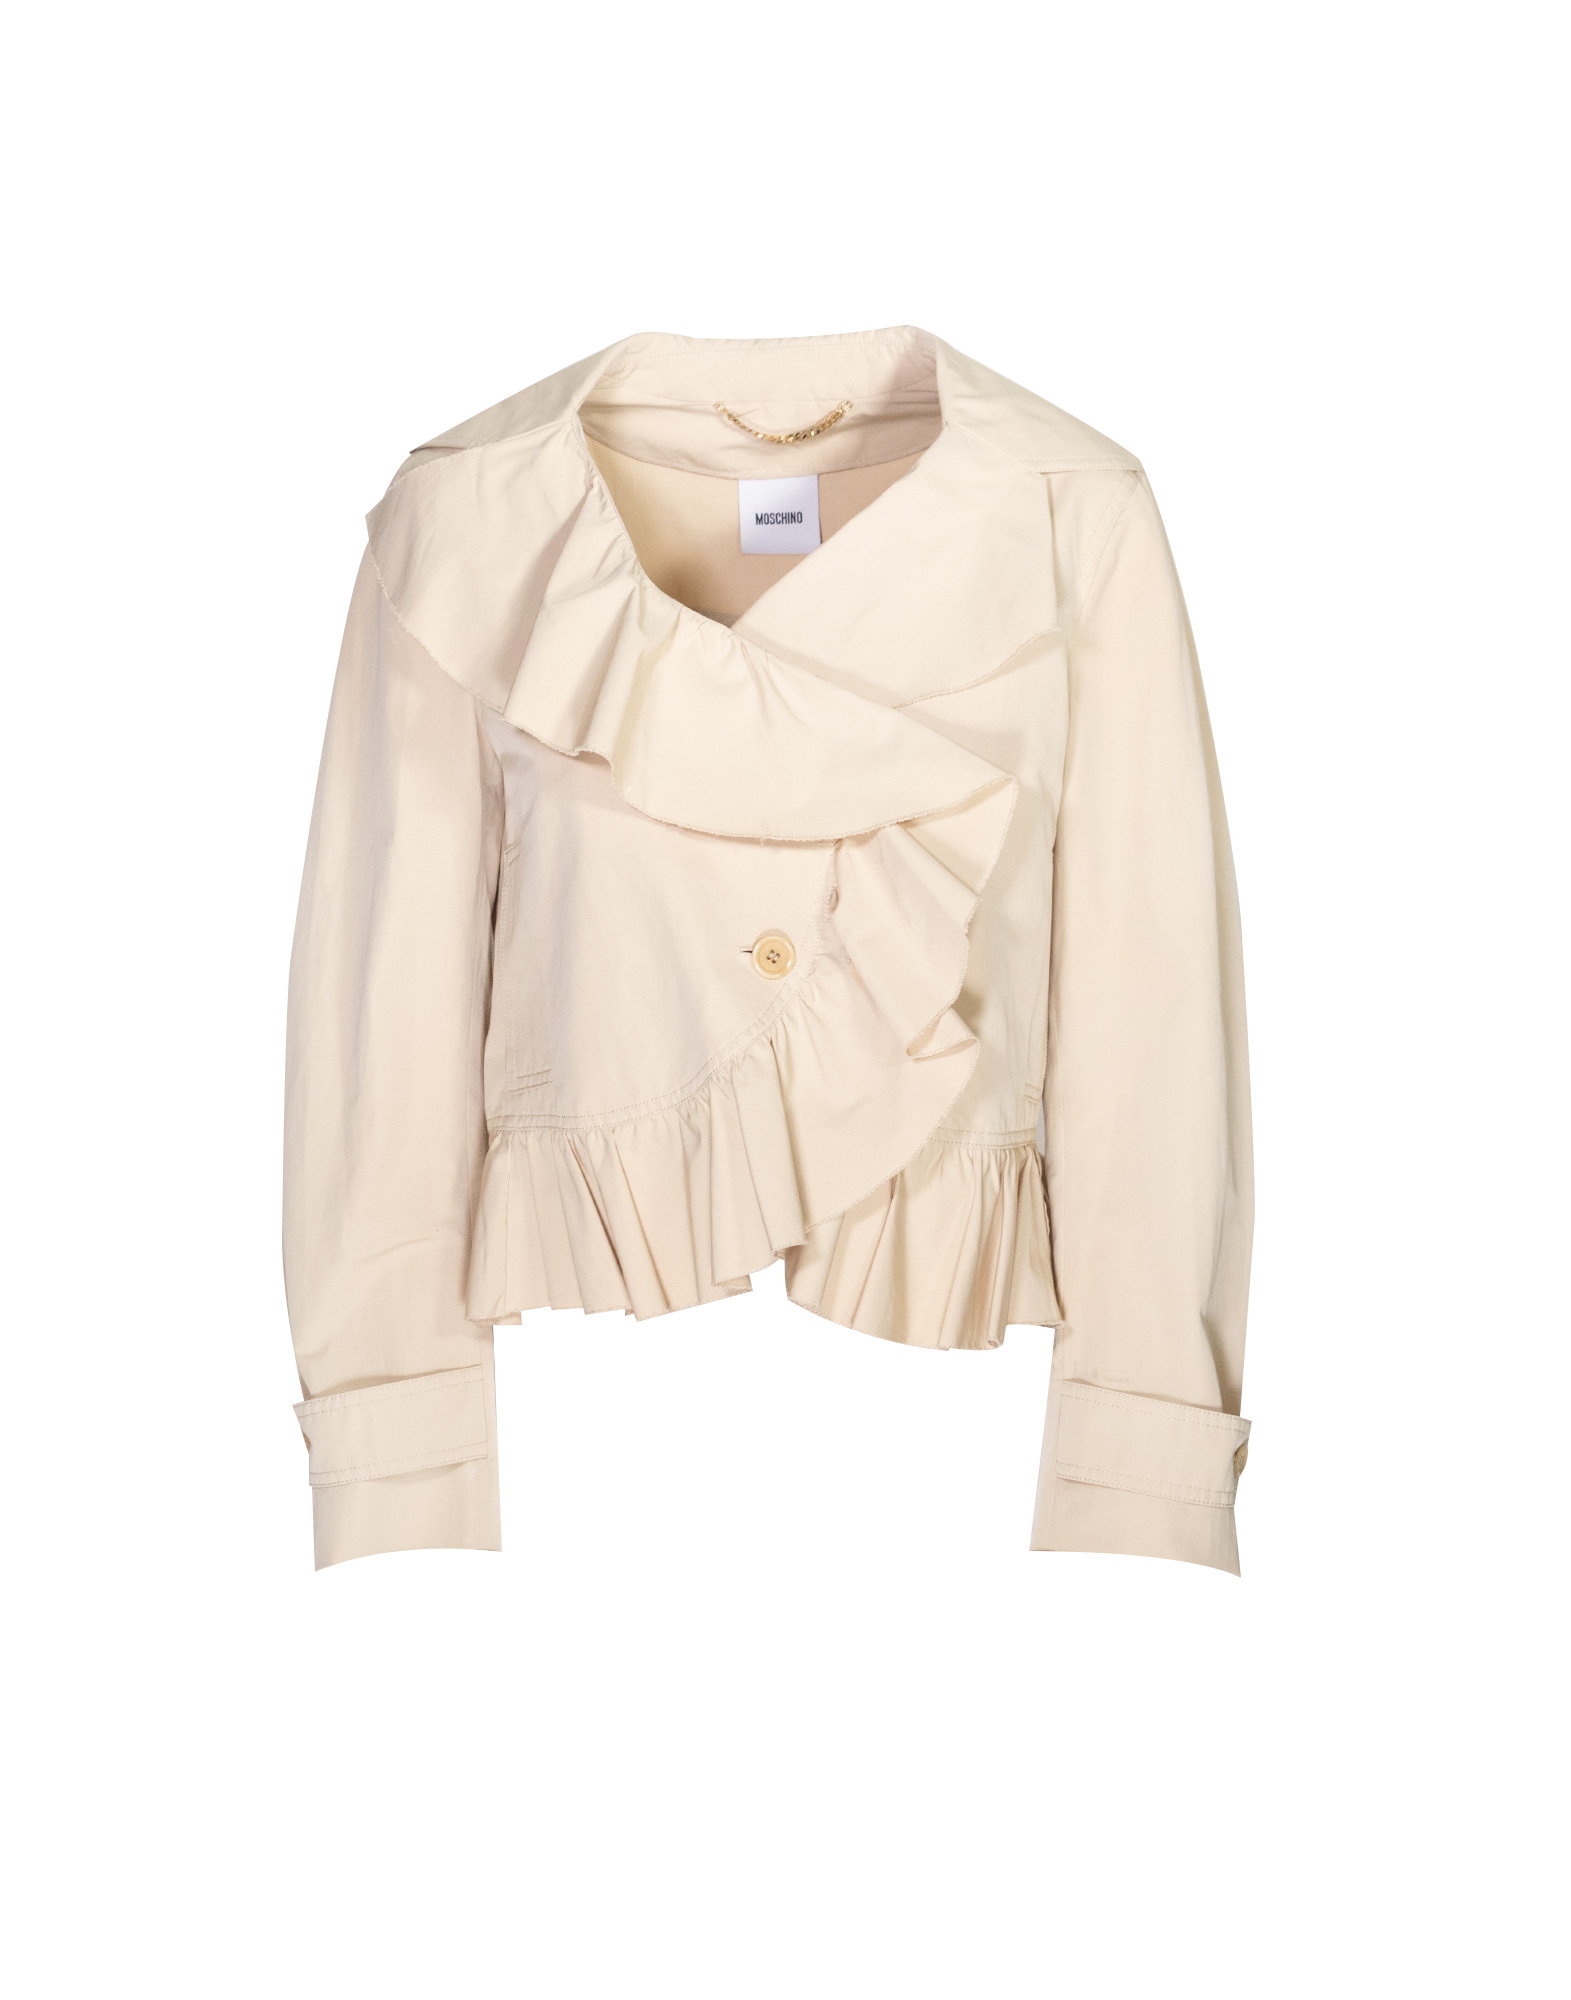 Moschino - Cotton jacket with ruffles